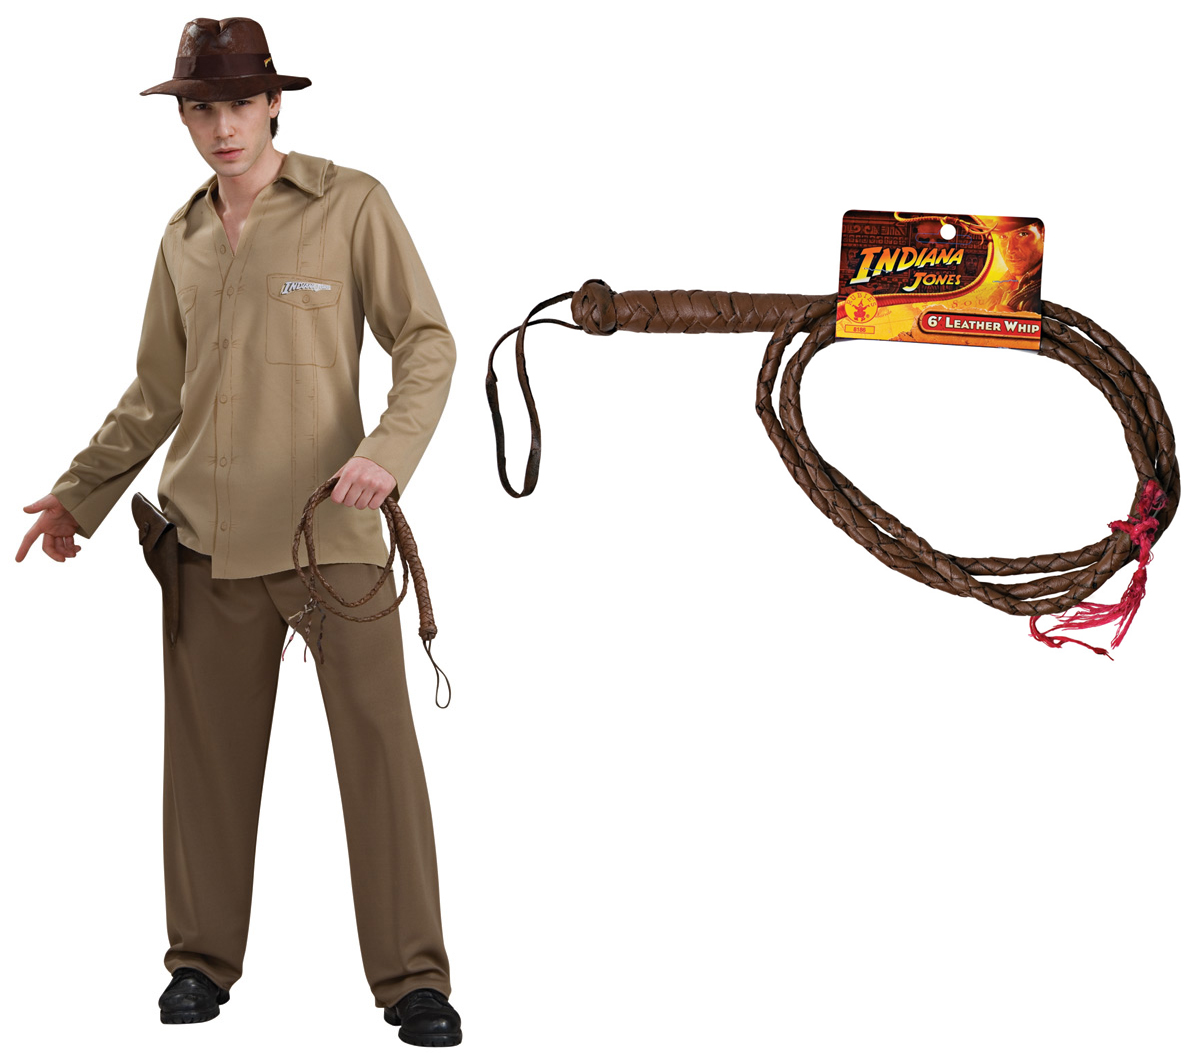 Indiana Jones Adult Costume STD, XL + Leather Whip